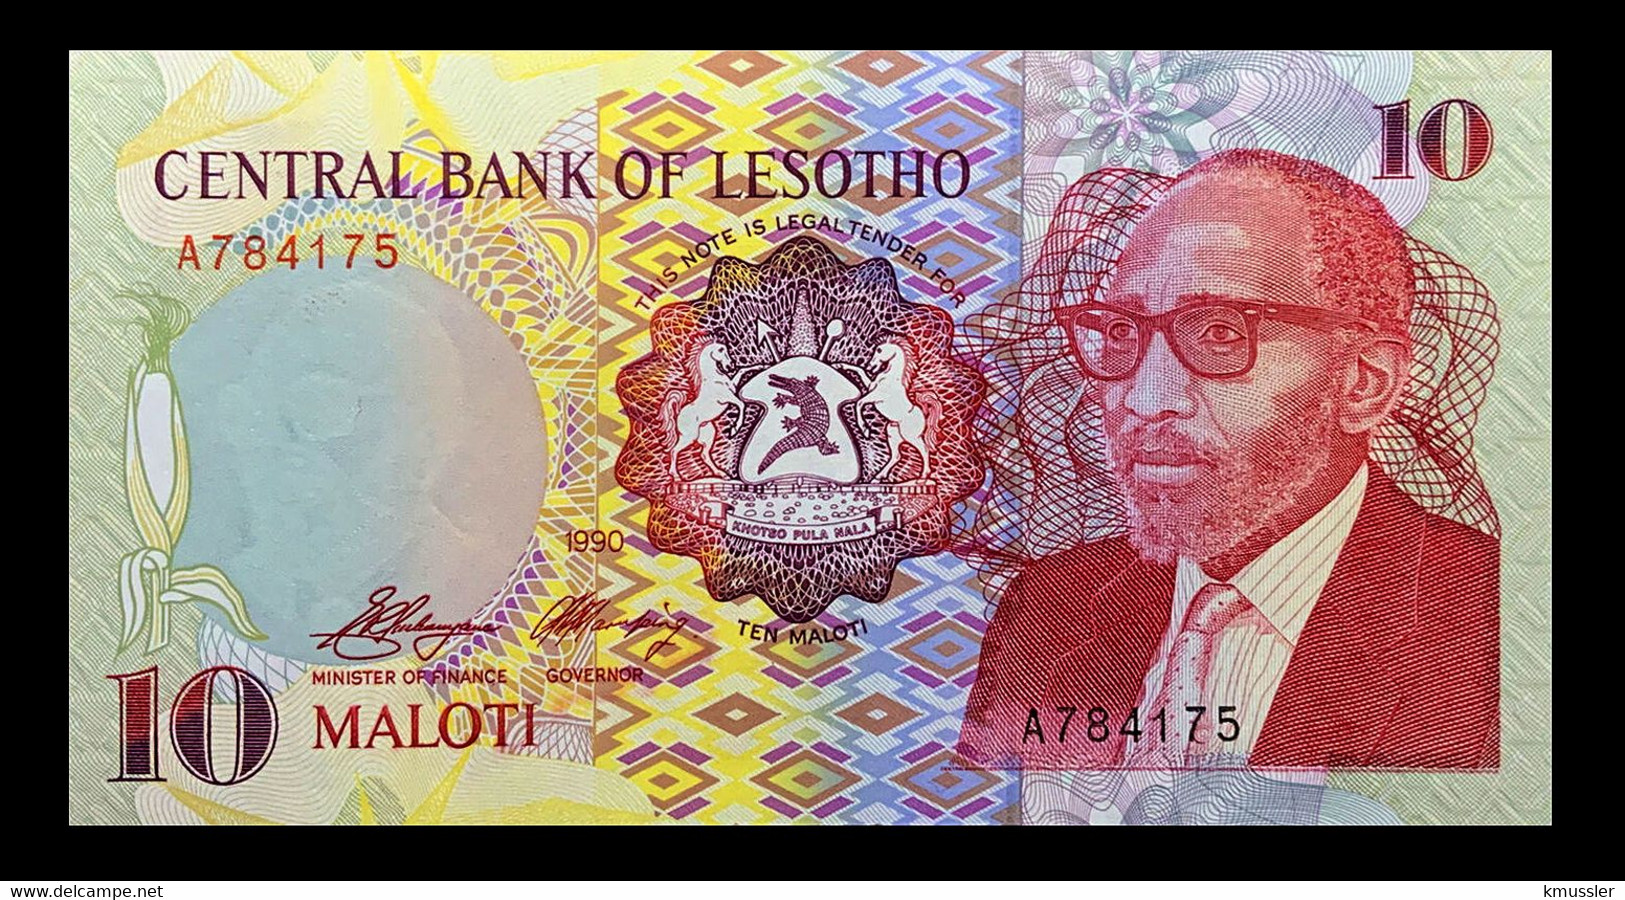 # # # Banknote Aus Lesotho 10 Maloti 1990 UNC # # # - Lesoto